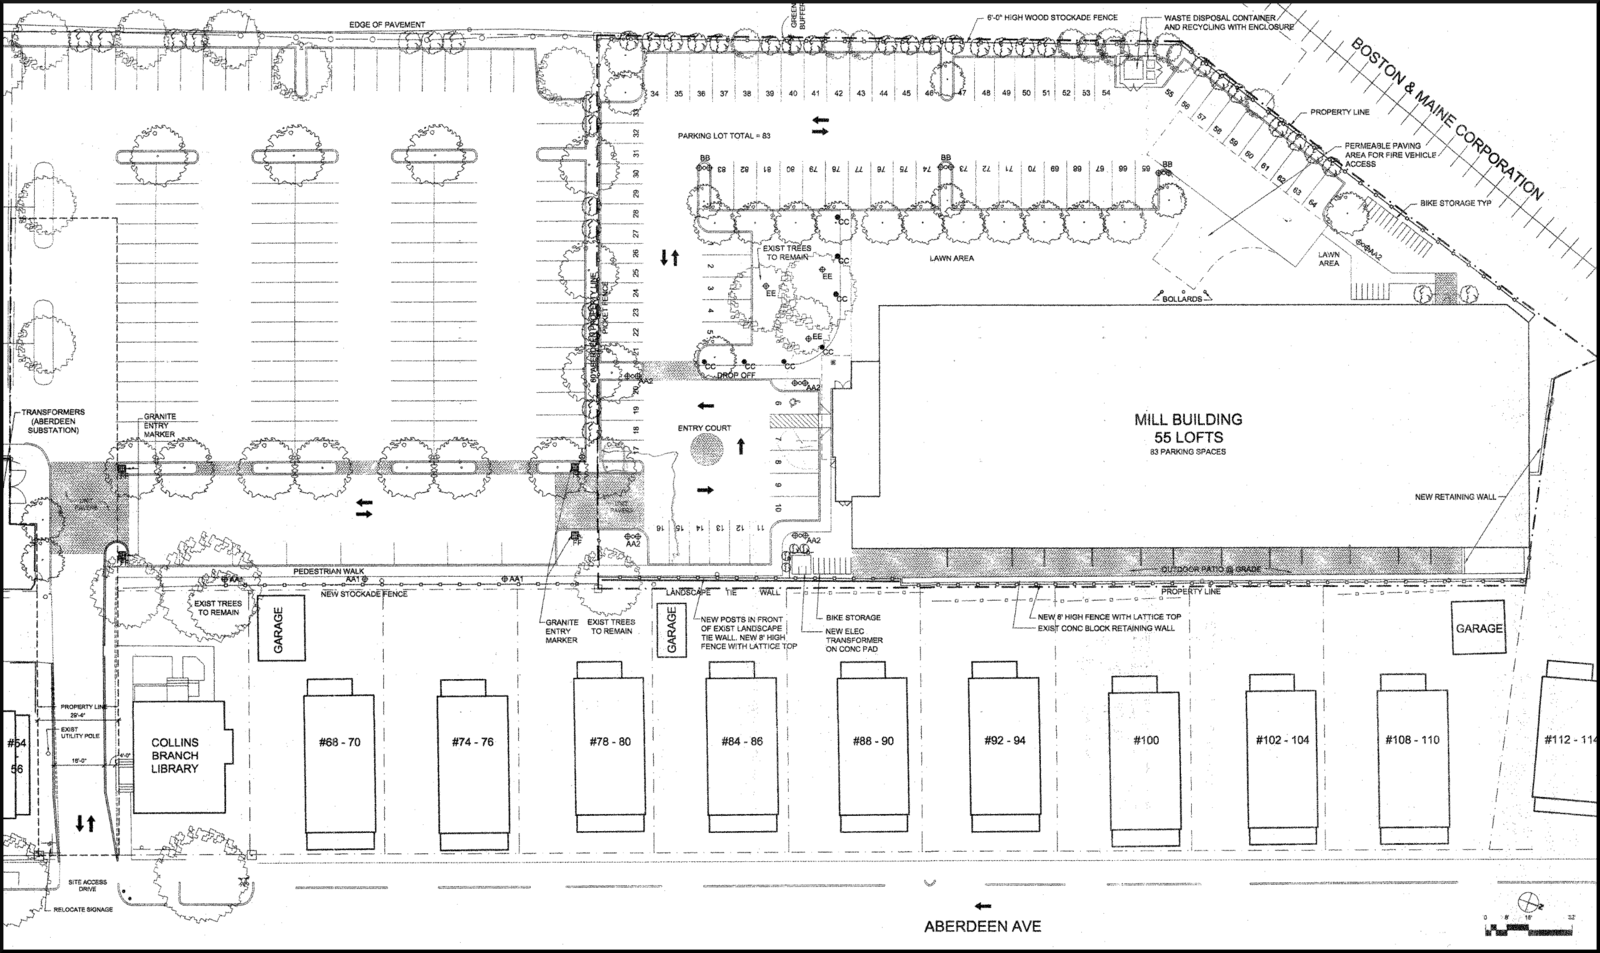 Architectural site plan for the Aberdeen Lofts condominium.